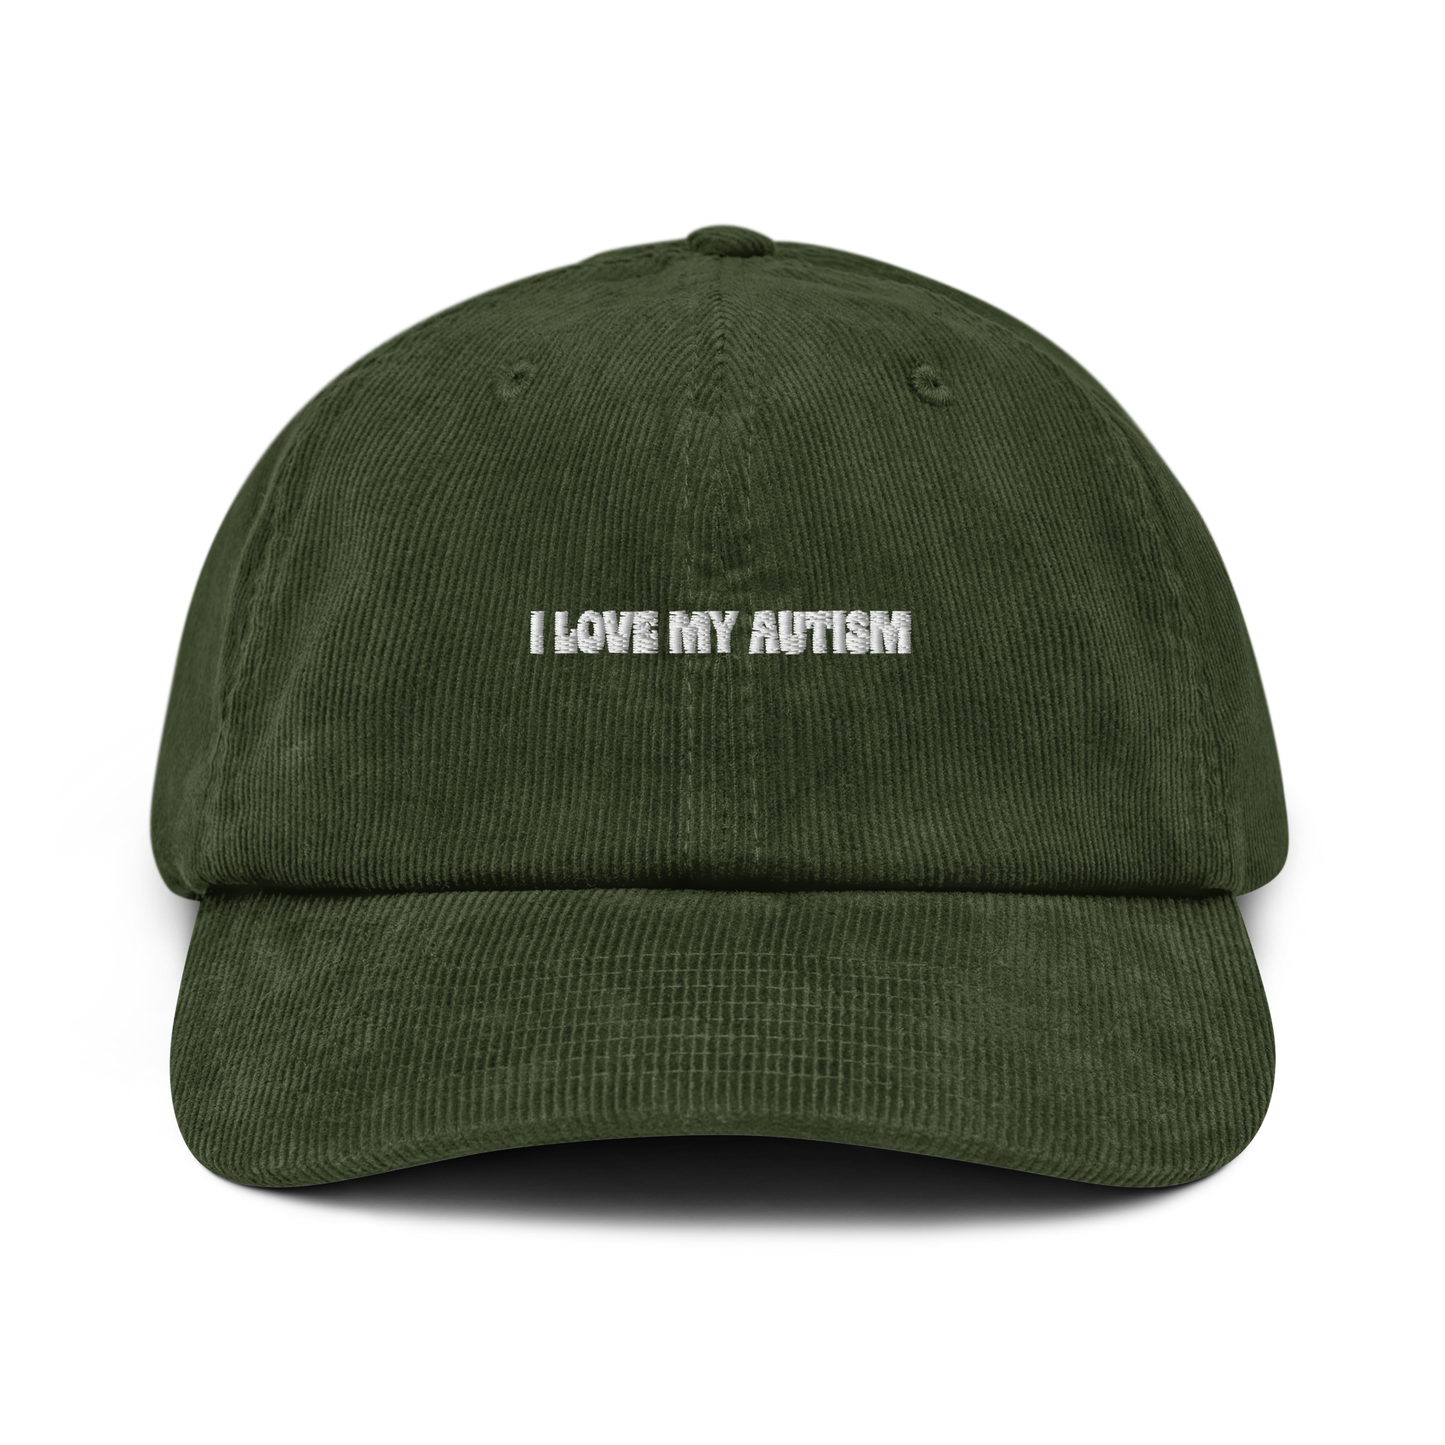 I Love My Autism Corduroy Hat (Camel/Olive)